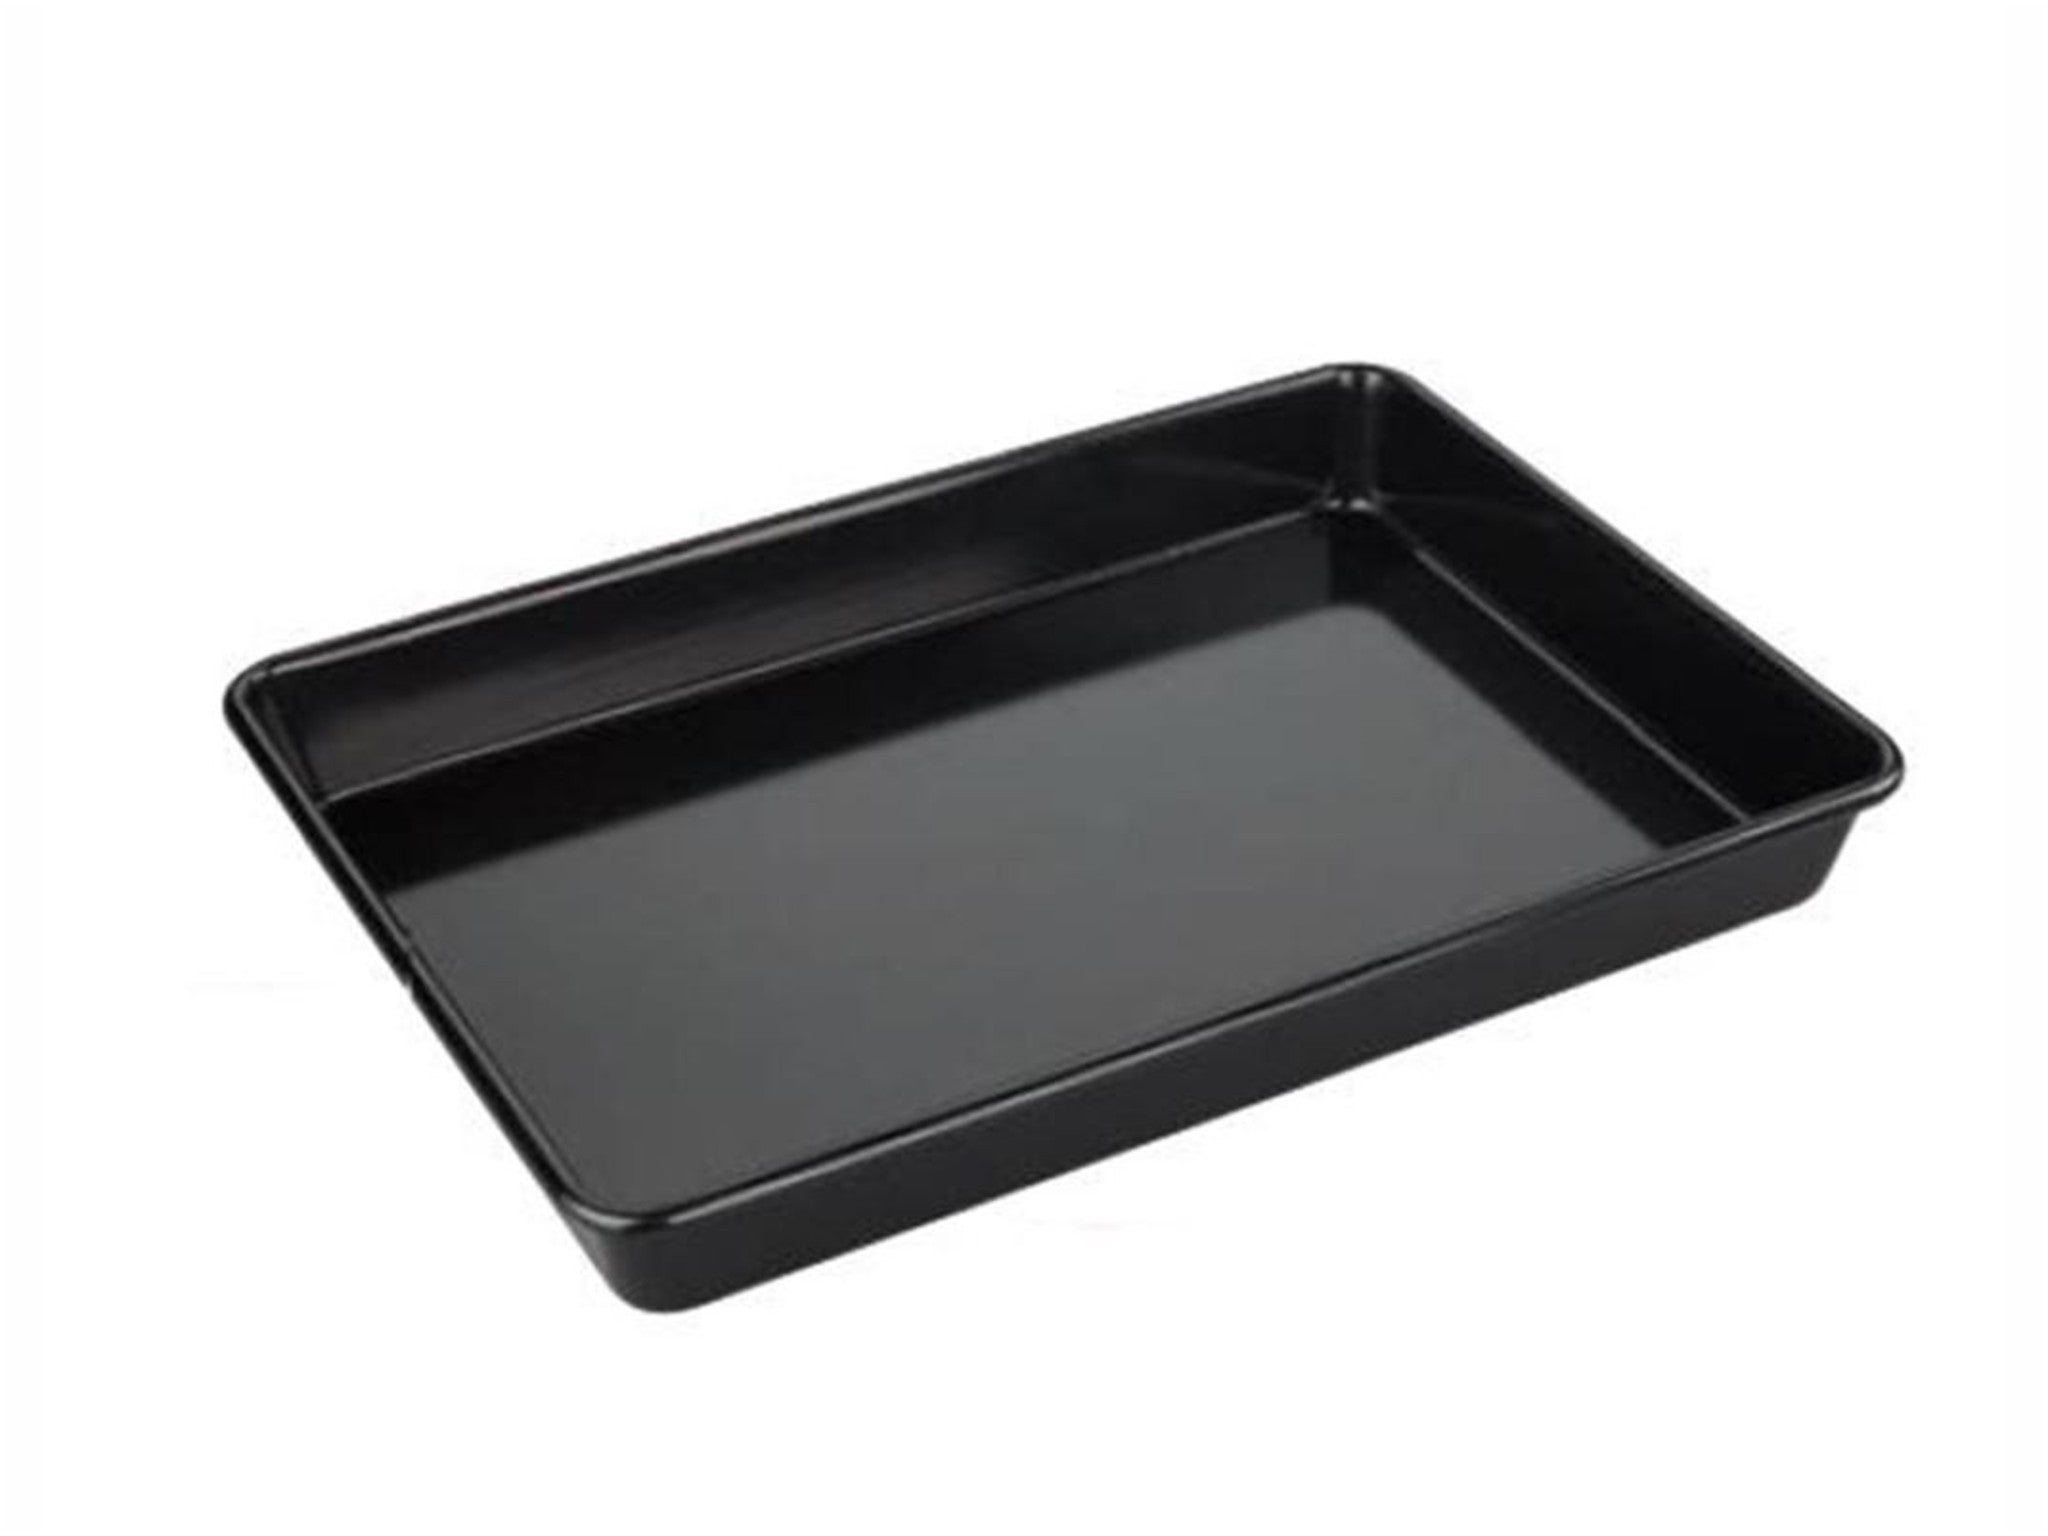  Tala Non Stick 10 Half Baking Tray, Black: Home & Kitchen